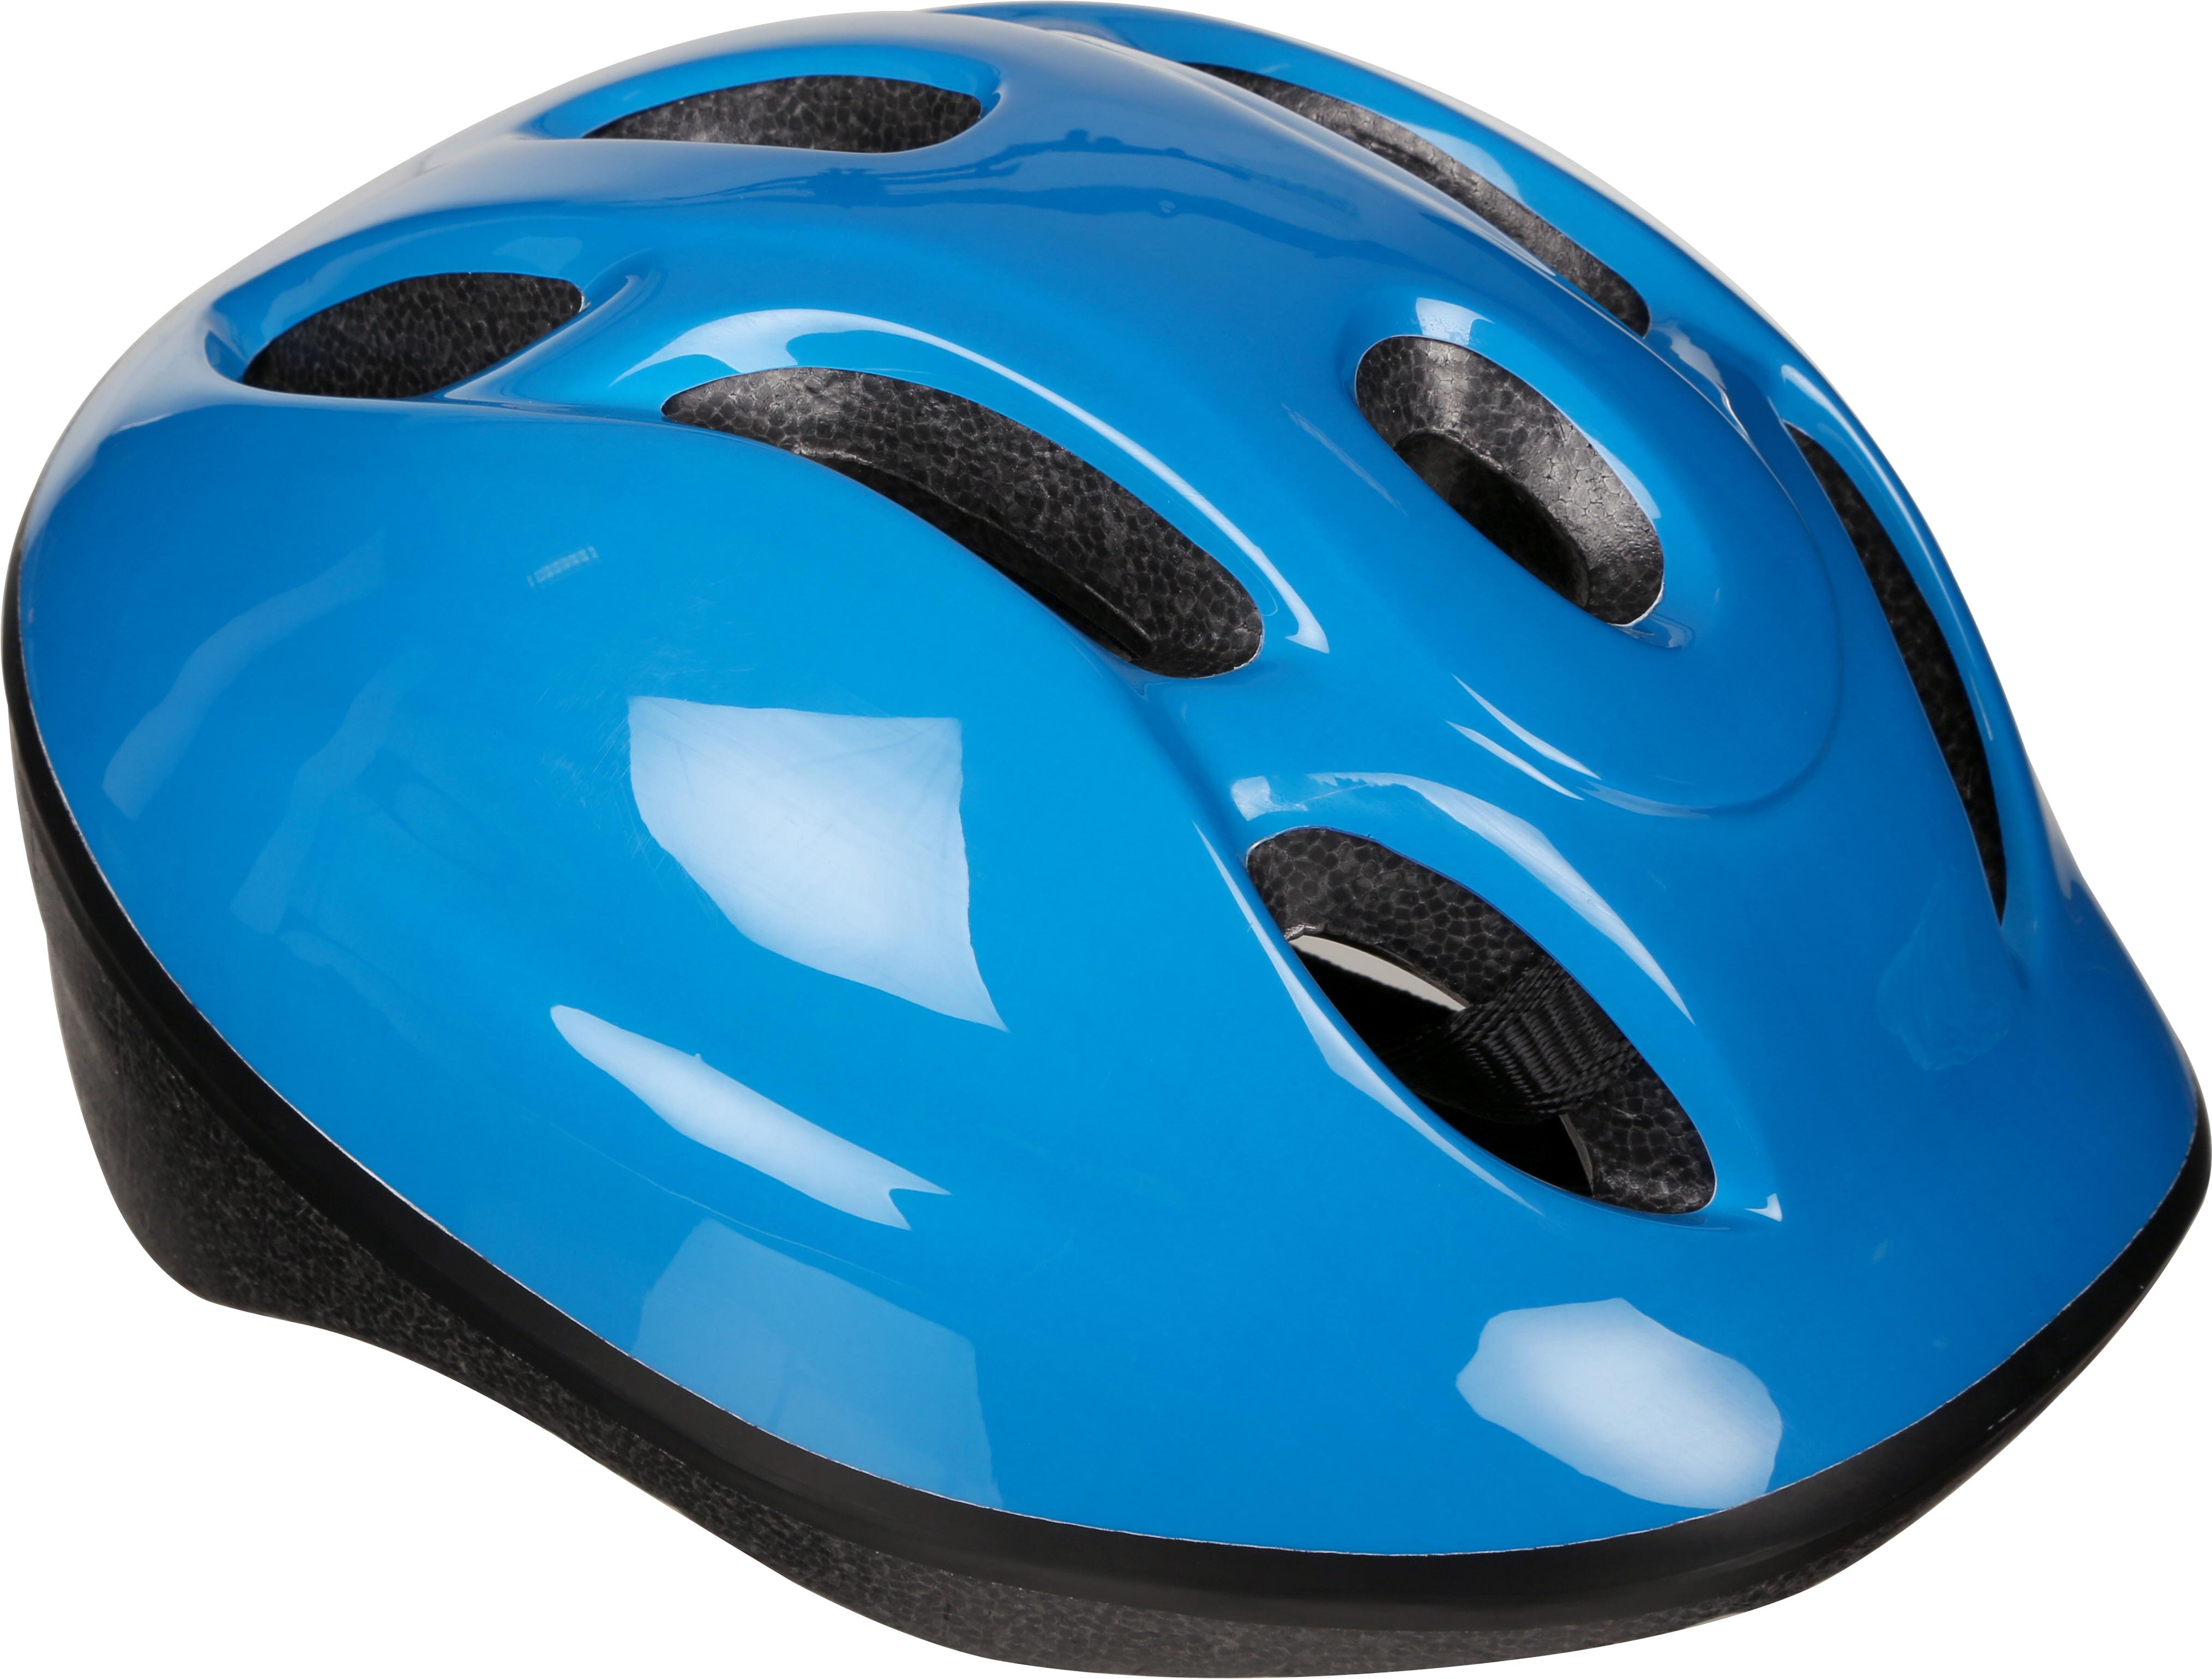 Kids Bike Helmet - Blue - 48-54cm, 50 